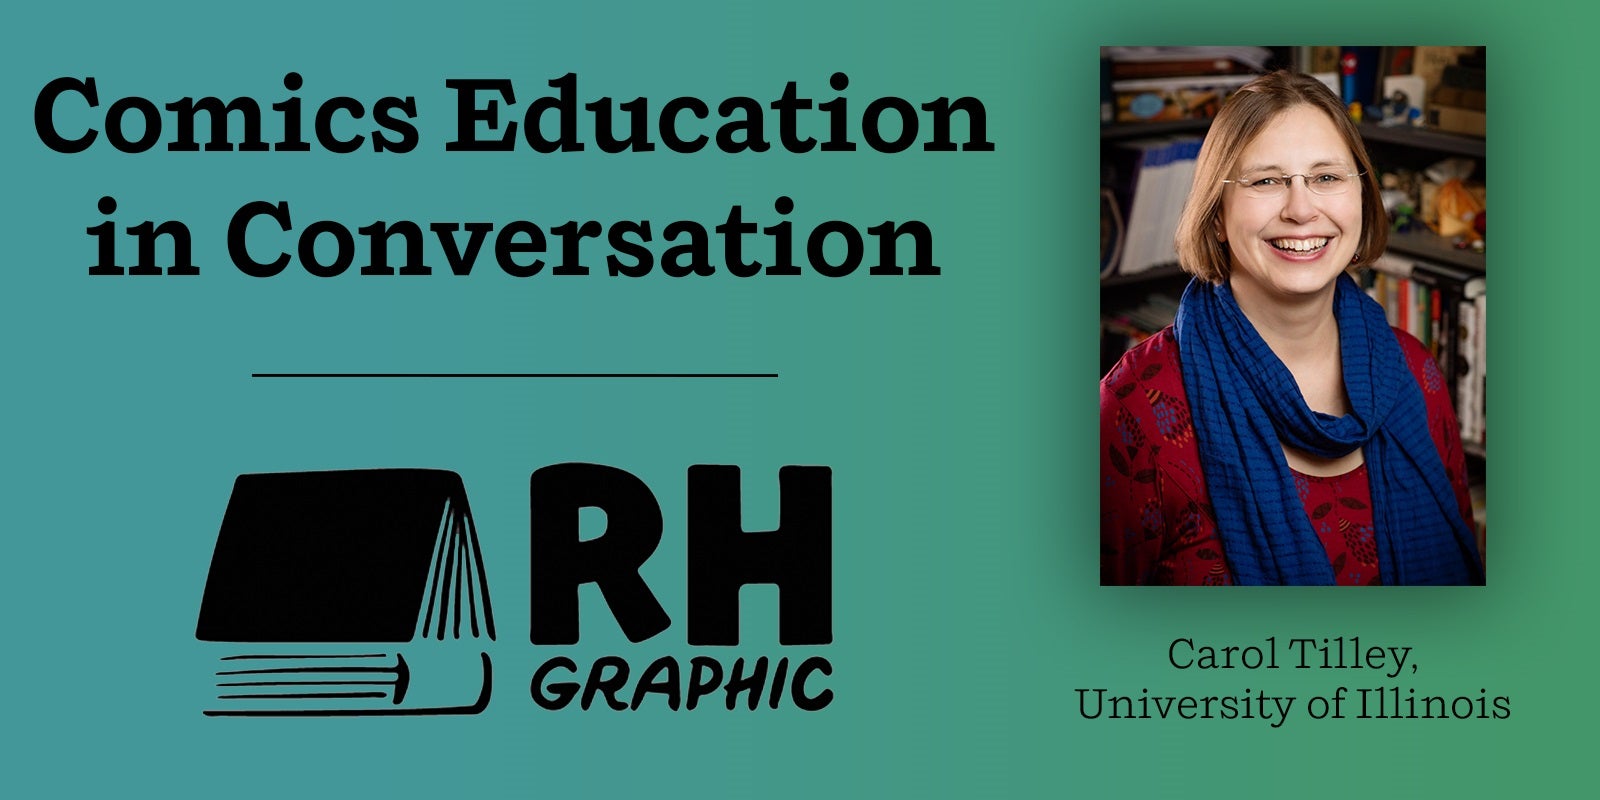 Comics Education in Conversation: Carol Tilley